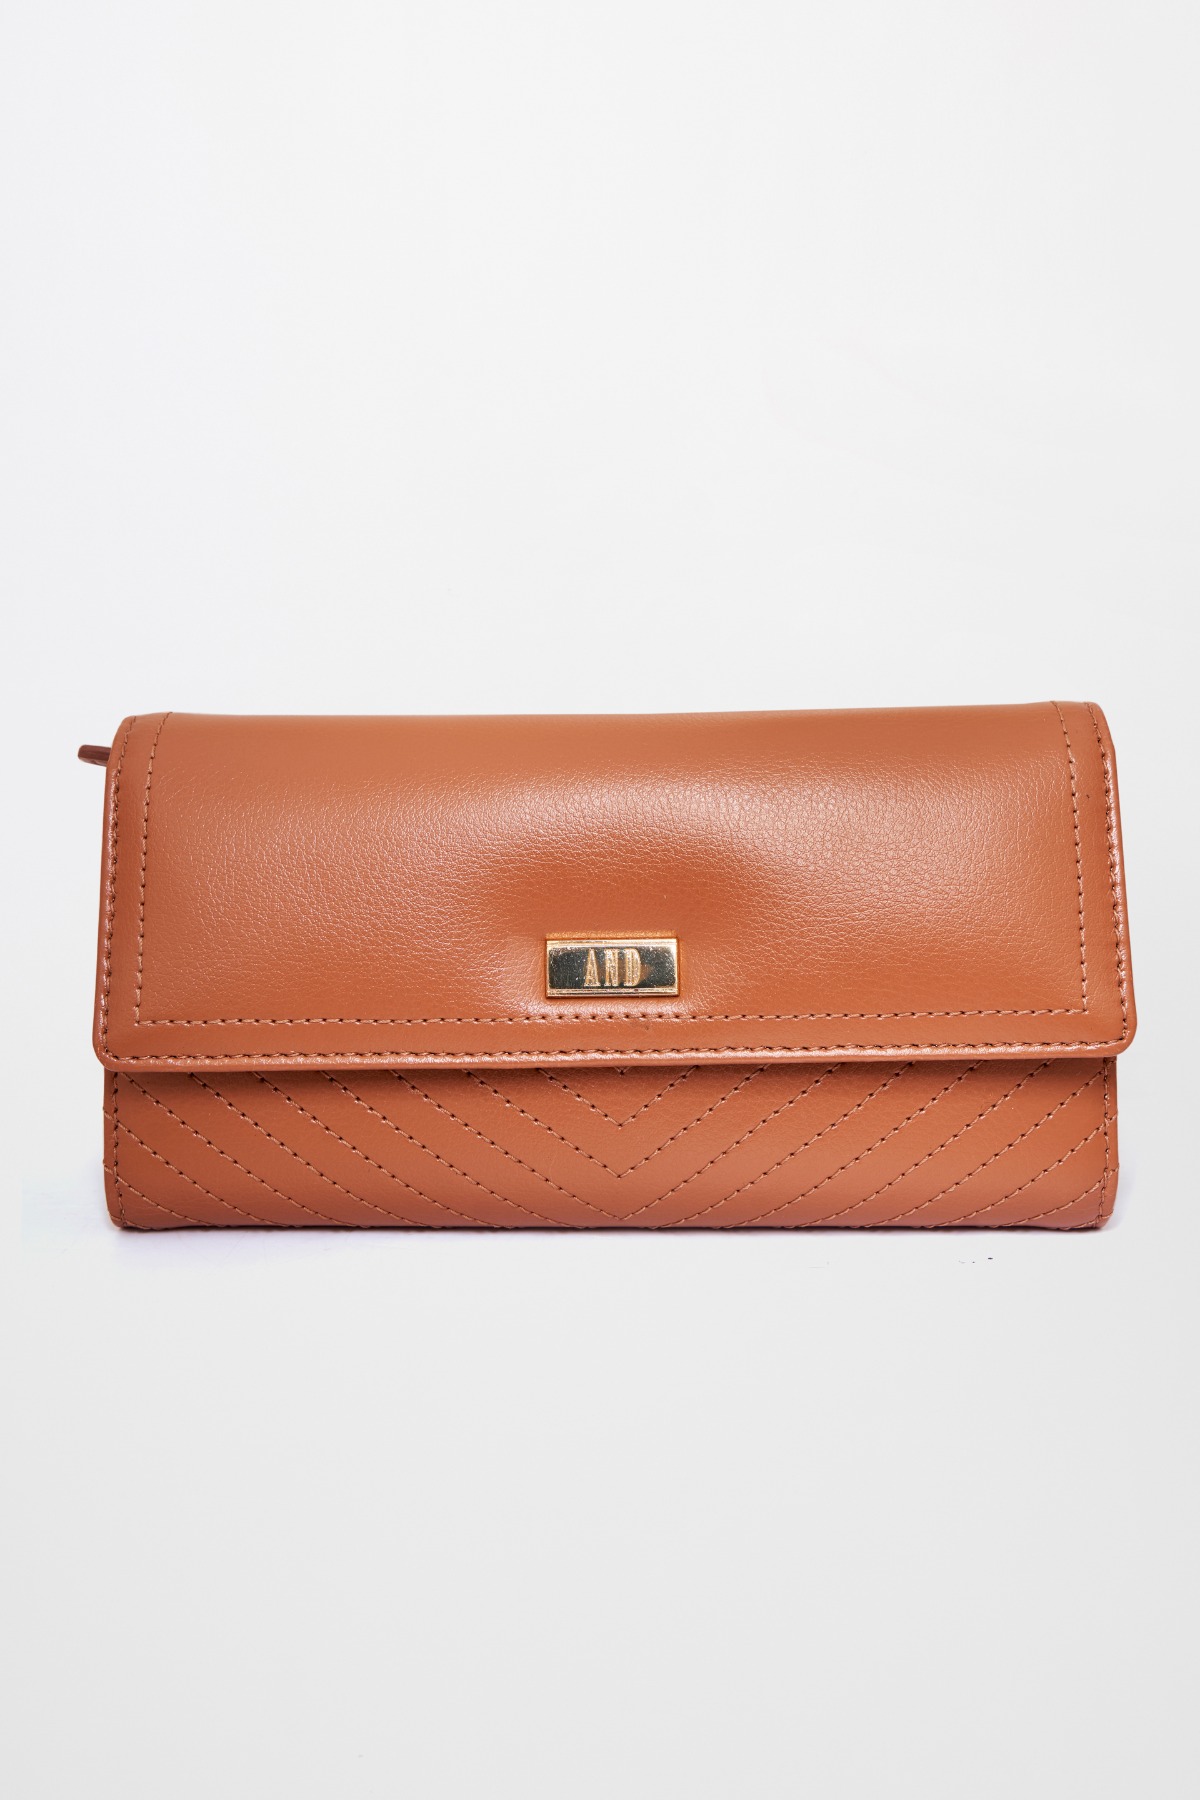 2 - Tan Handbag, image 1